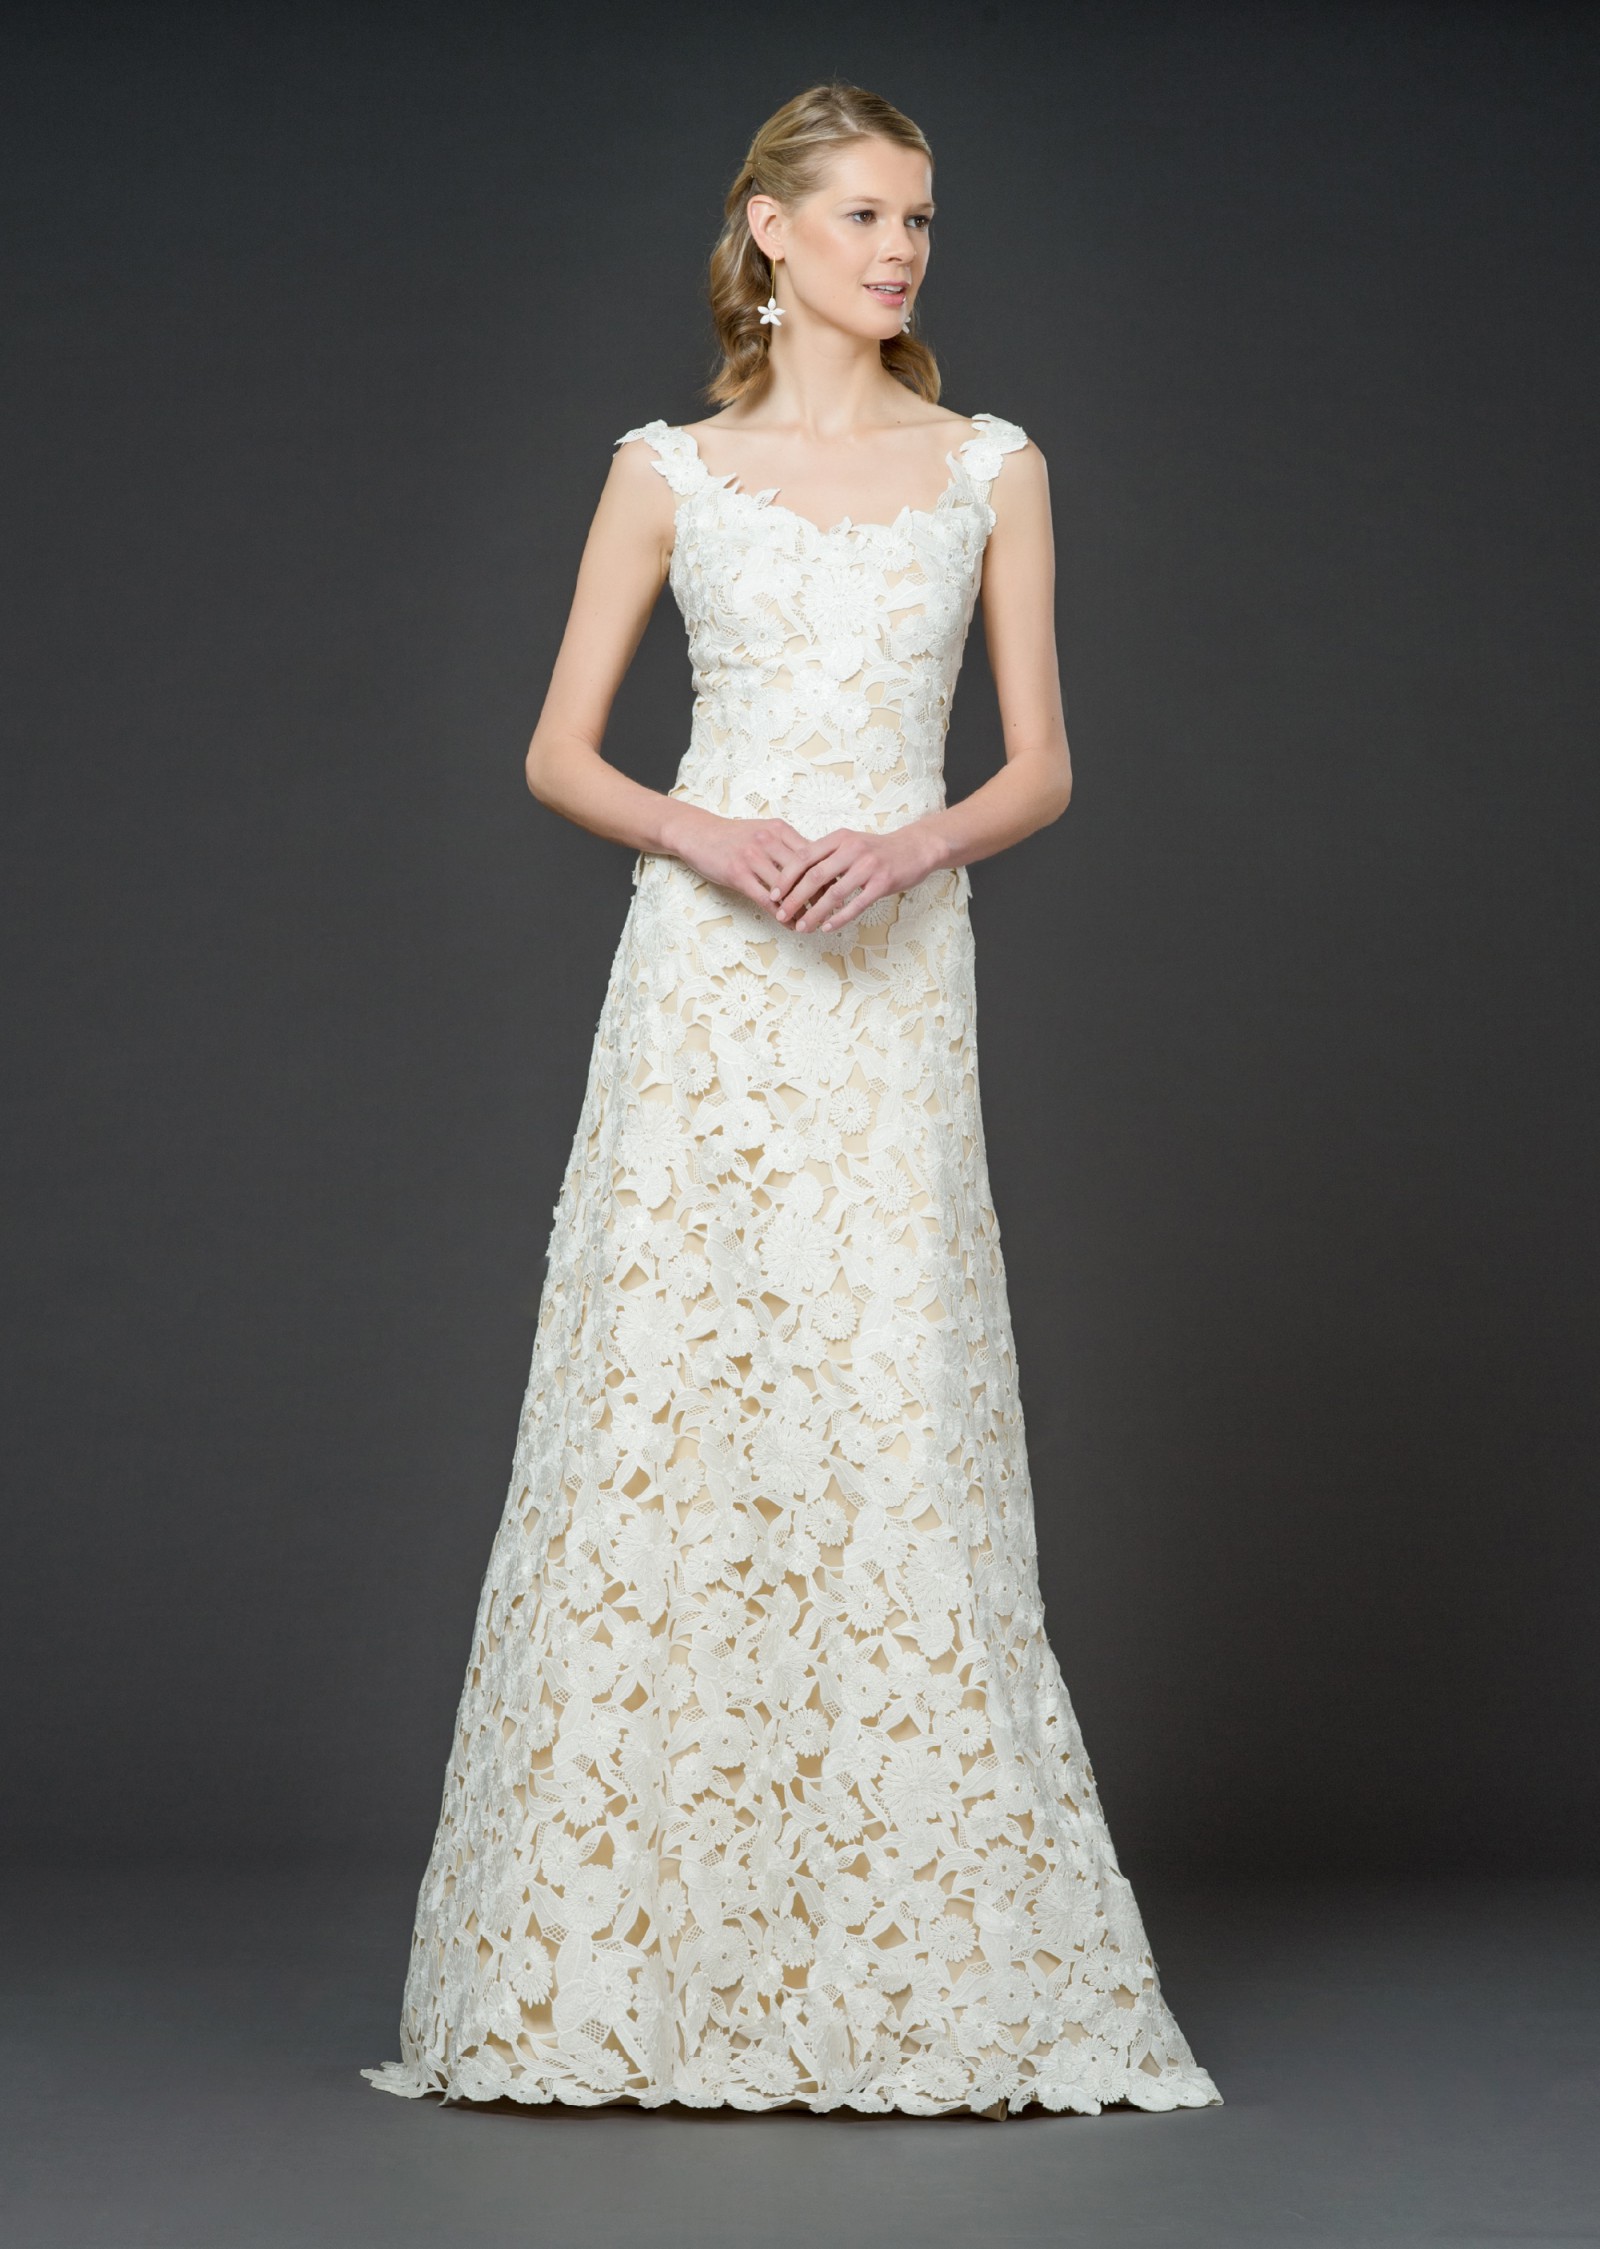 Carolina Herrera New Jolie Gown Sample Wedding Dress Save 53% - Stillwhite